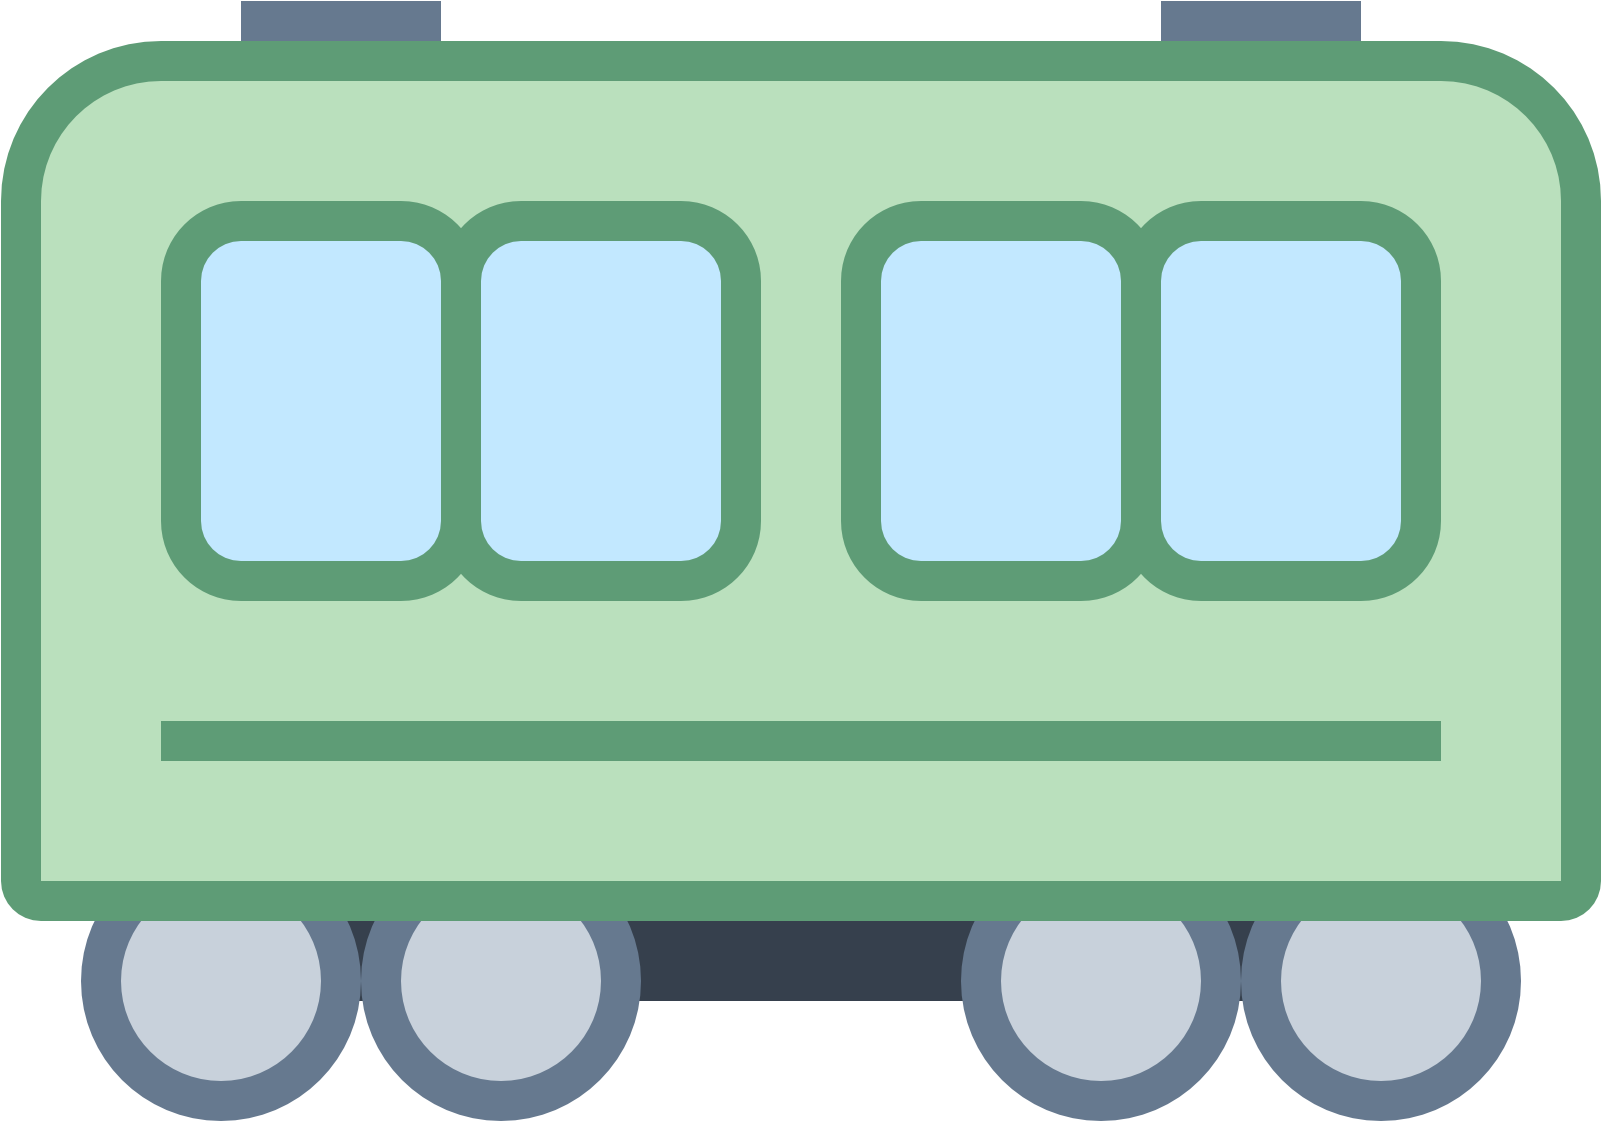 Rail Transport Train Railroad Car Clip Art - Rail Transport Train Railroad Car Clip Art (1600x1600)